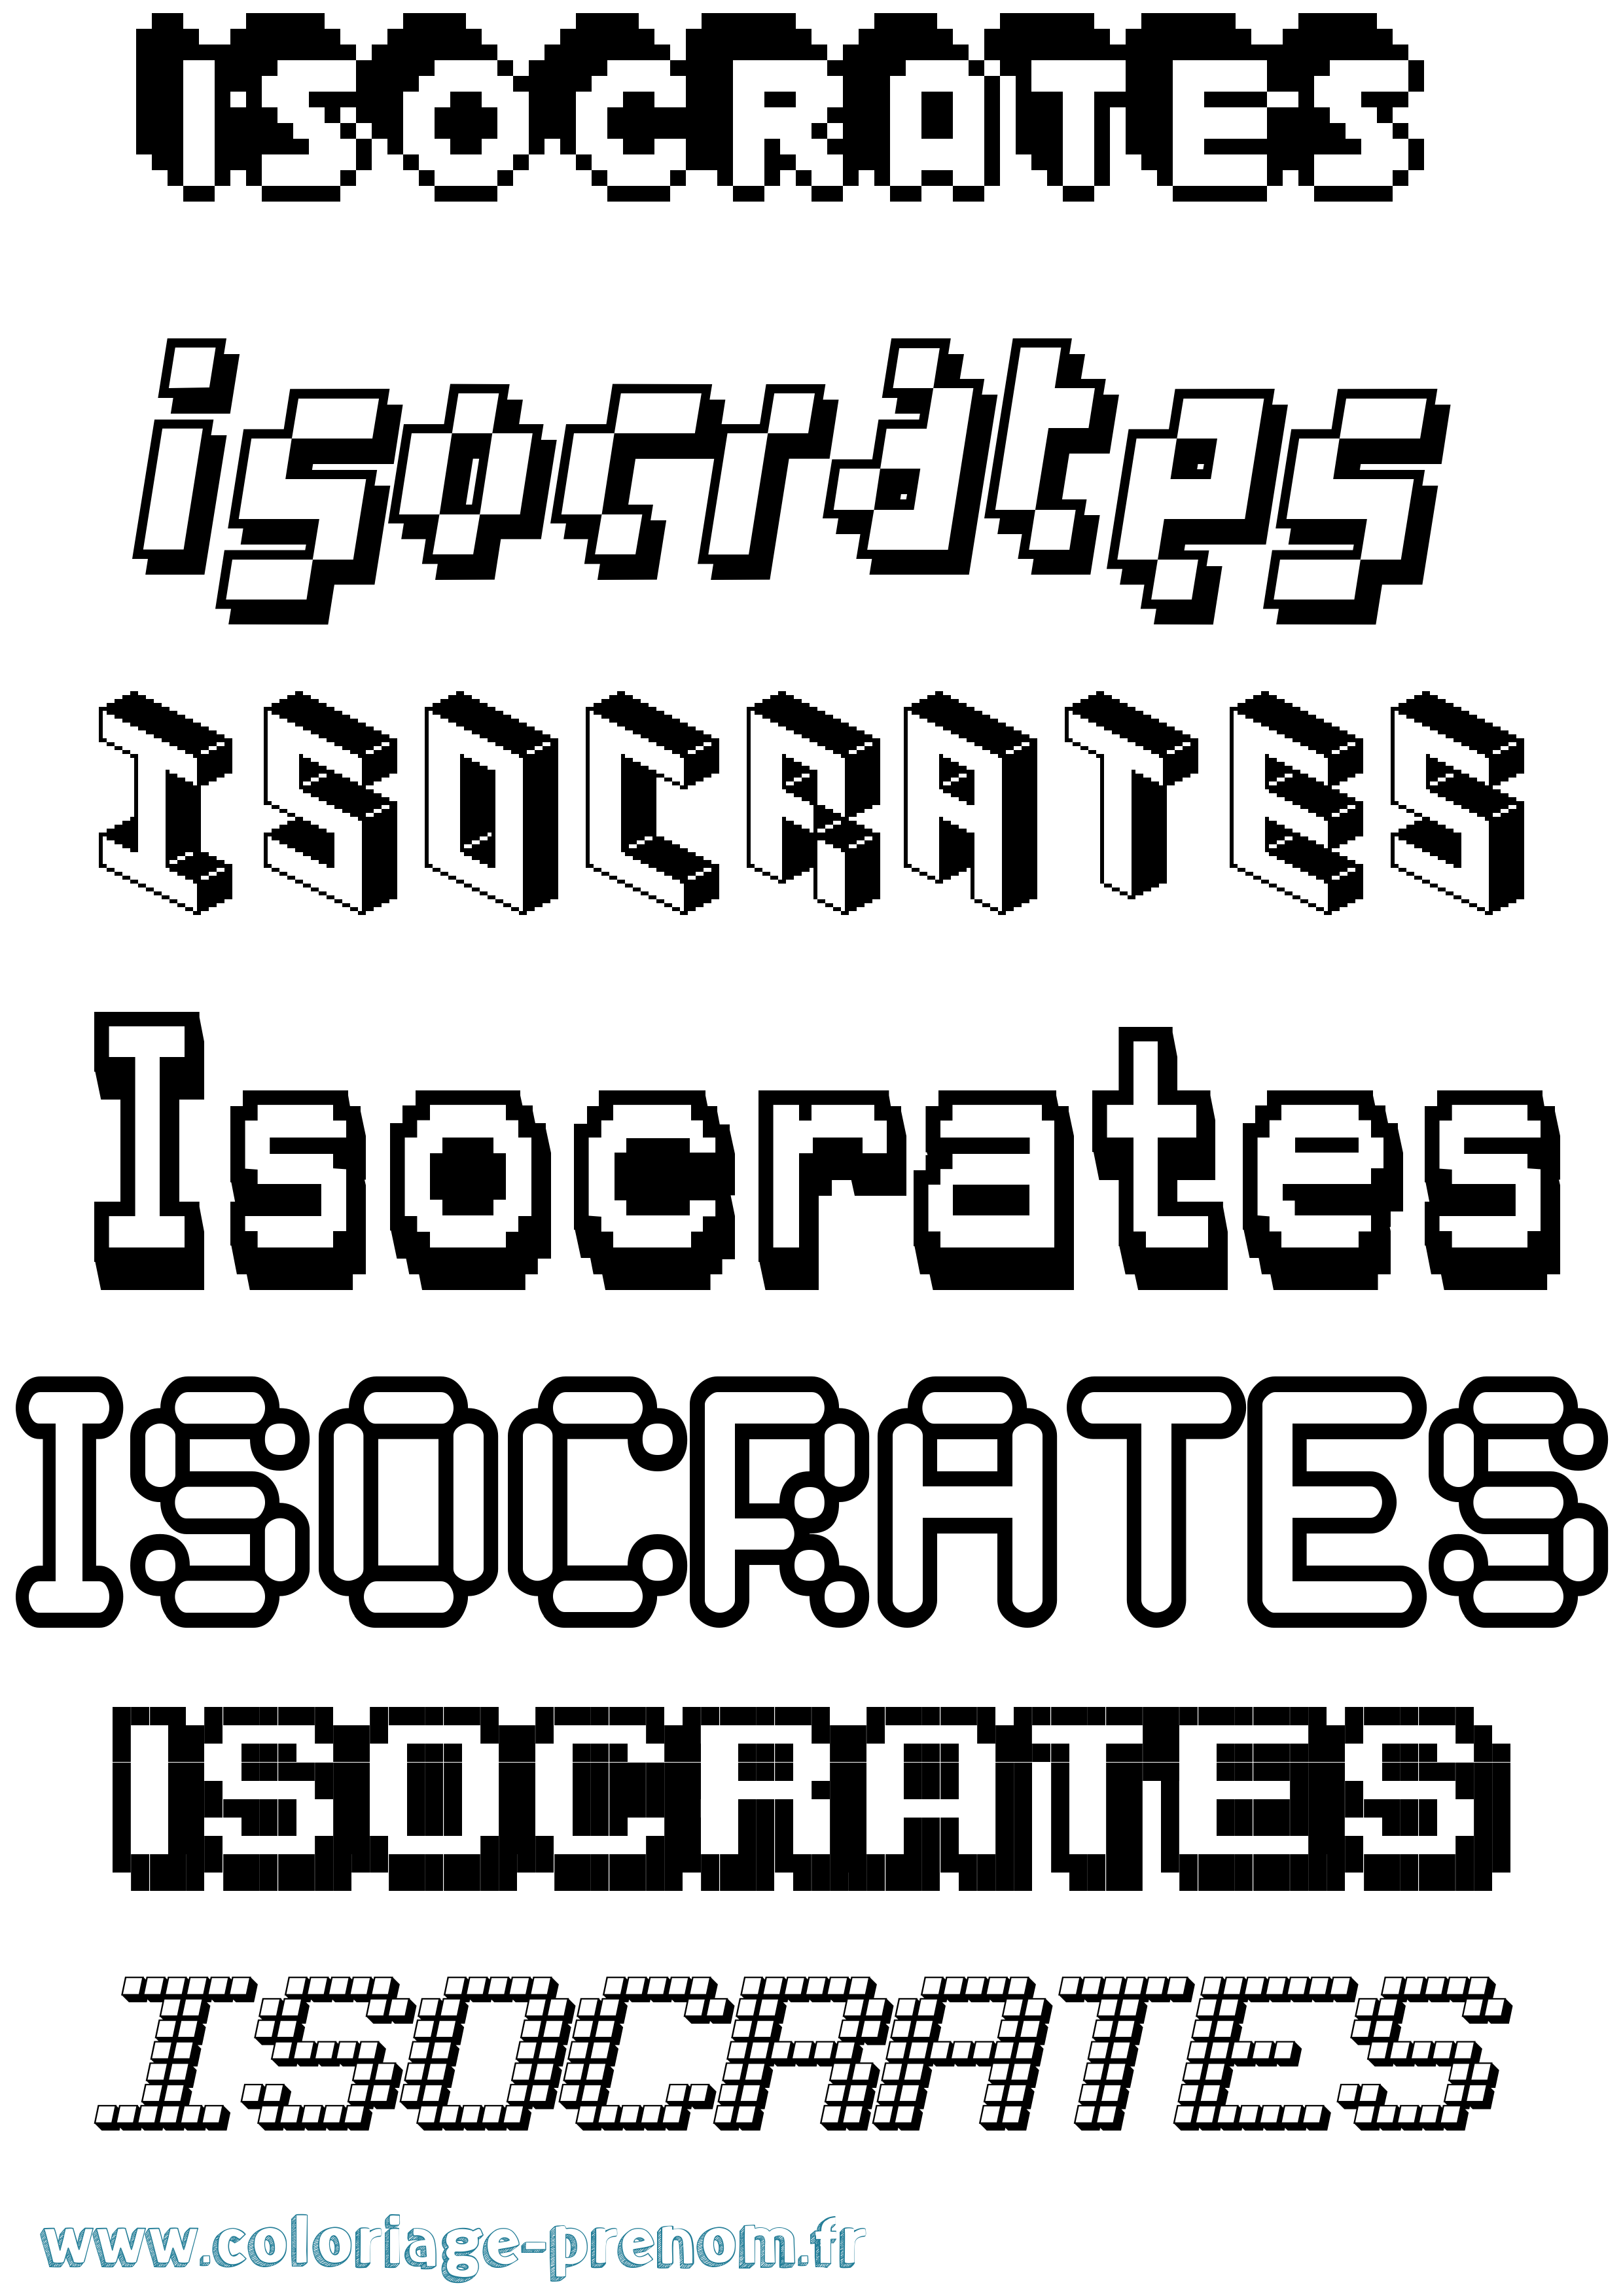 Coloriage prénom Isocrates Pixel